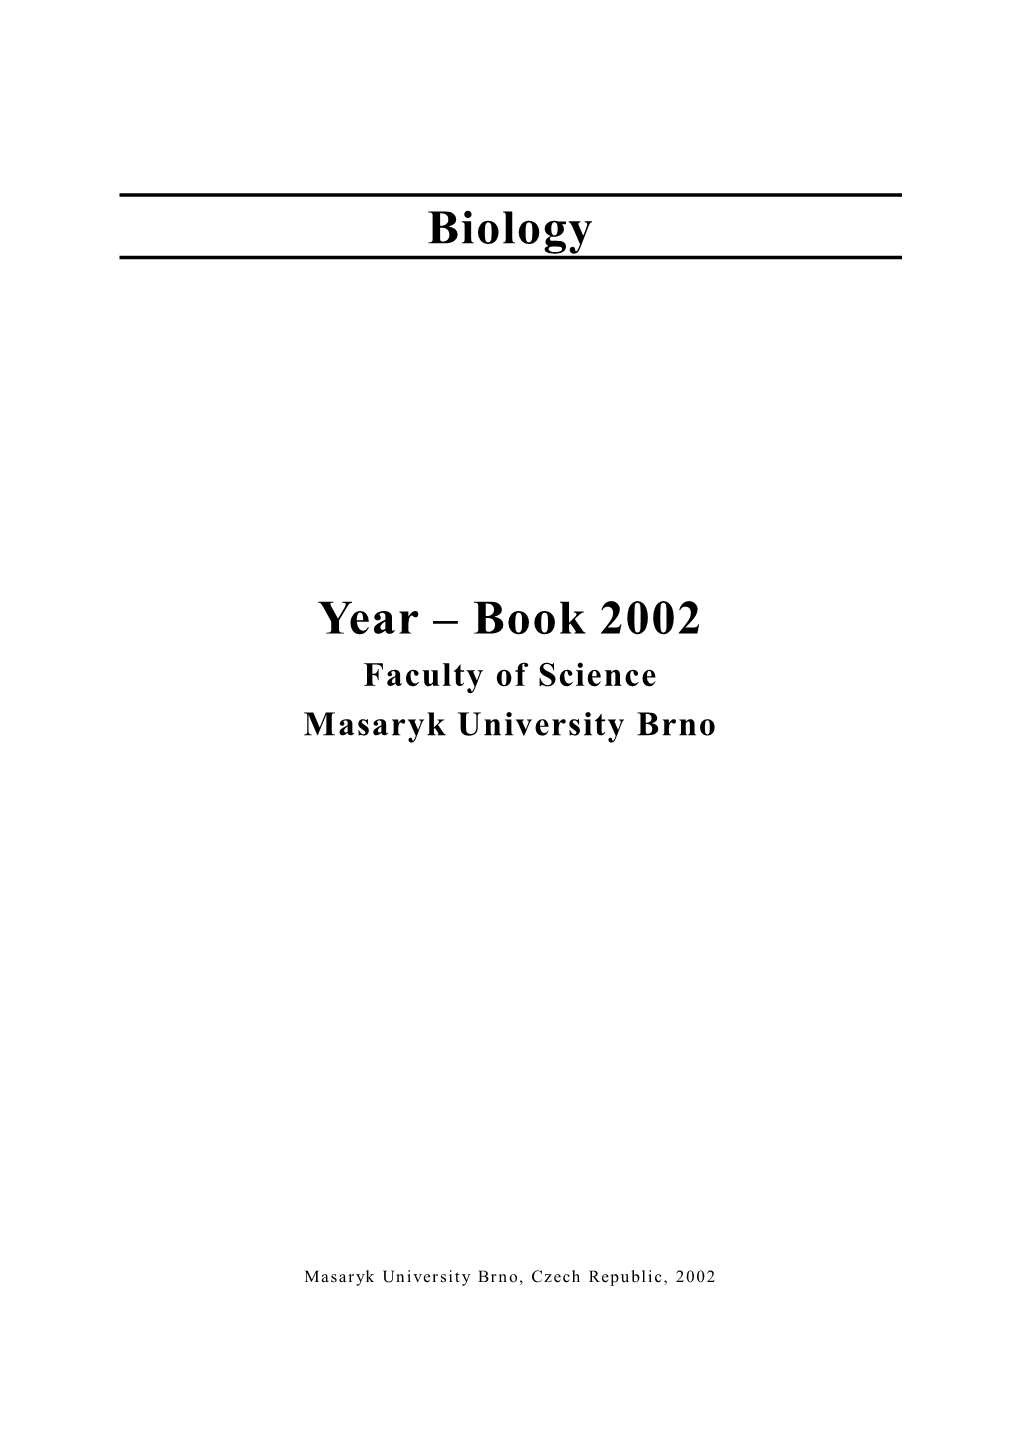 Year-Book 2002, Biology